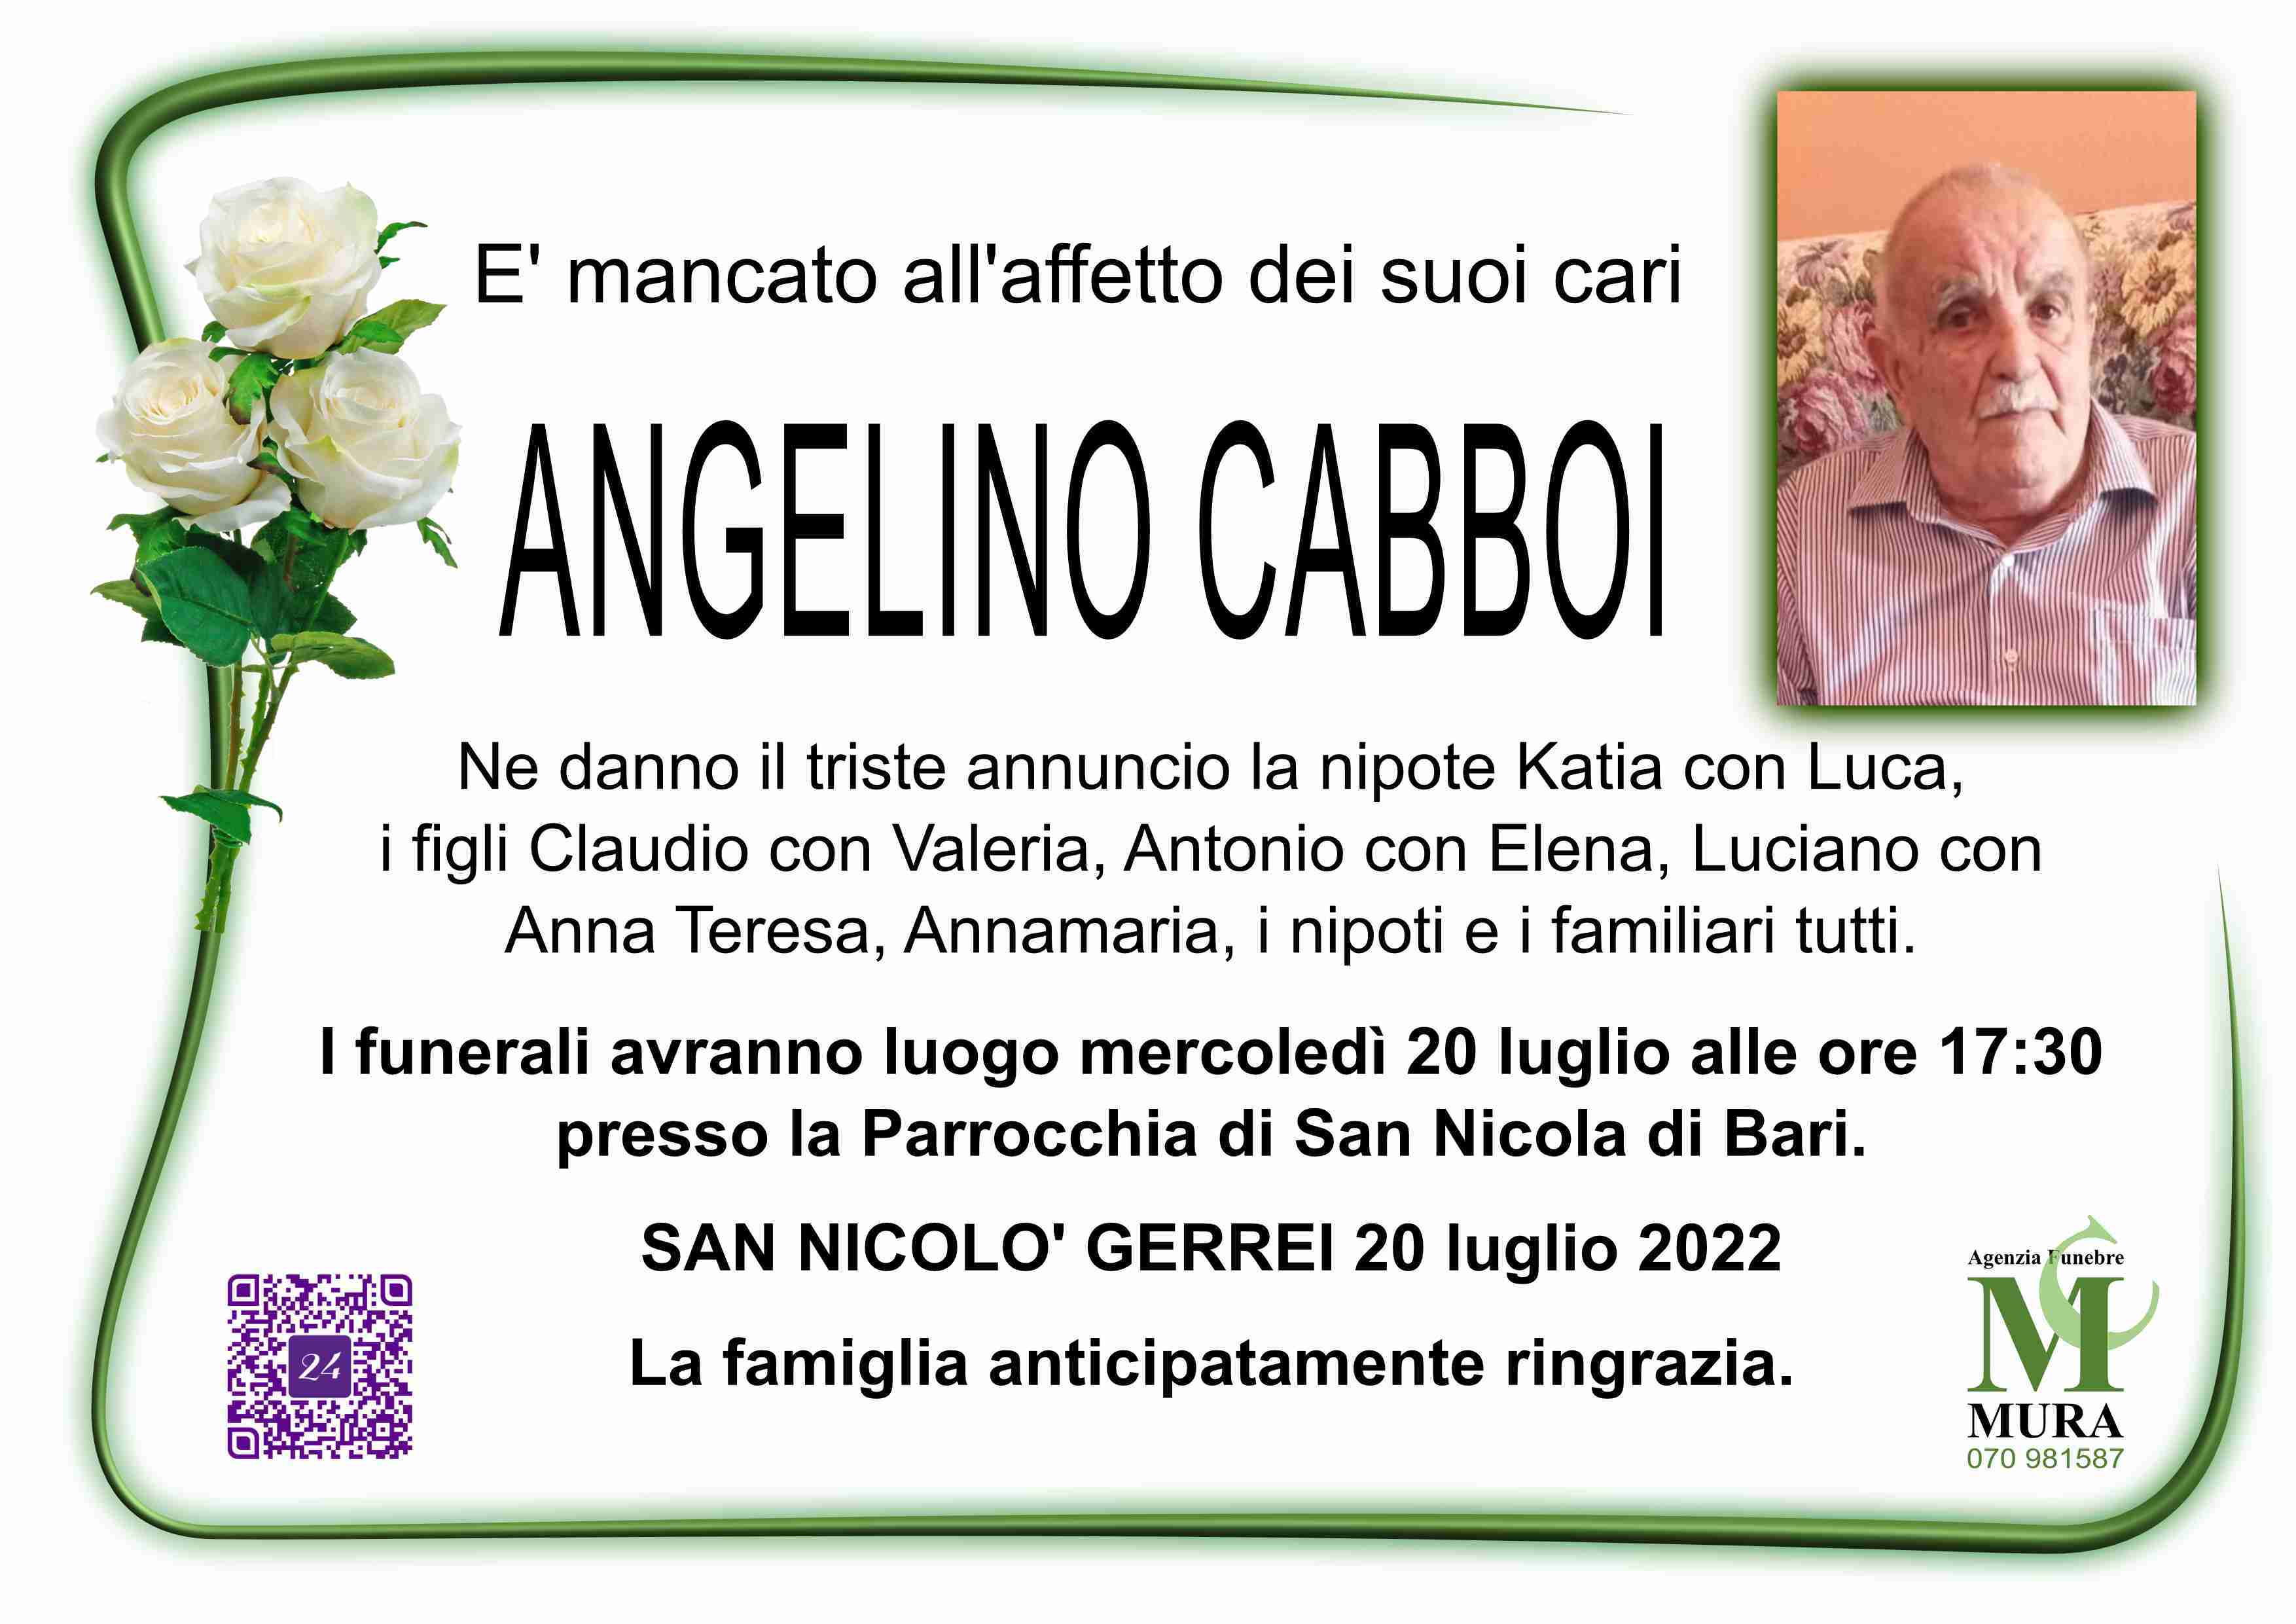 Angelino Cabboi